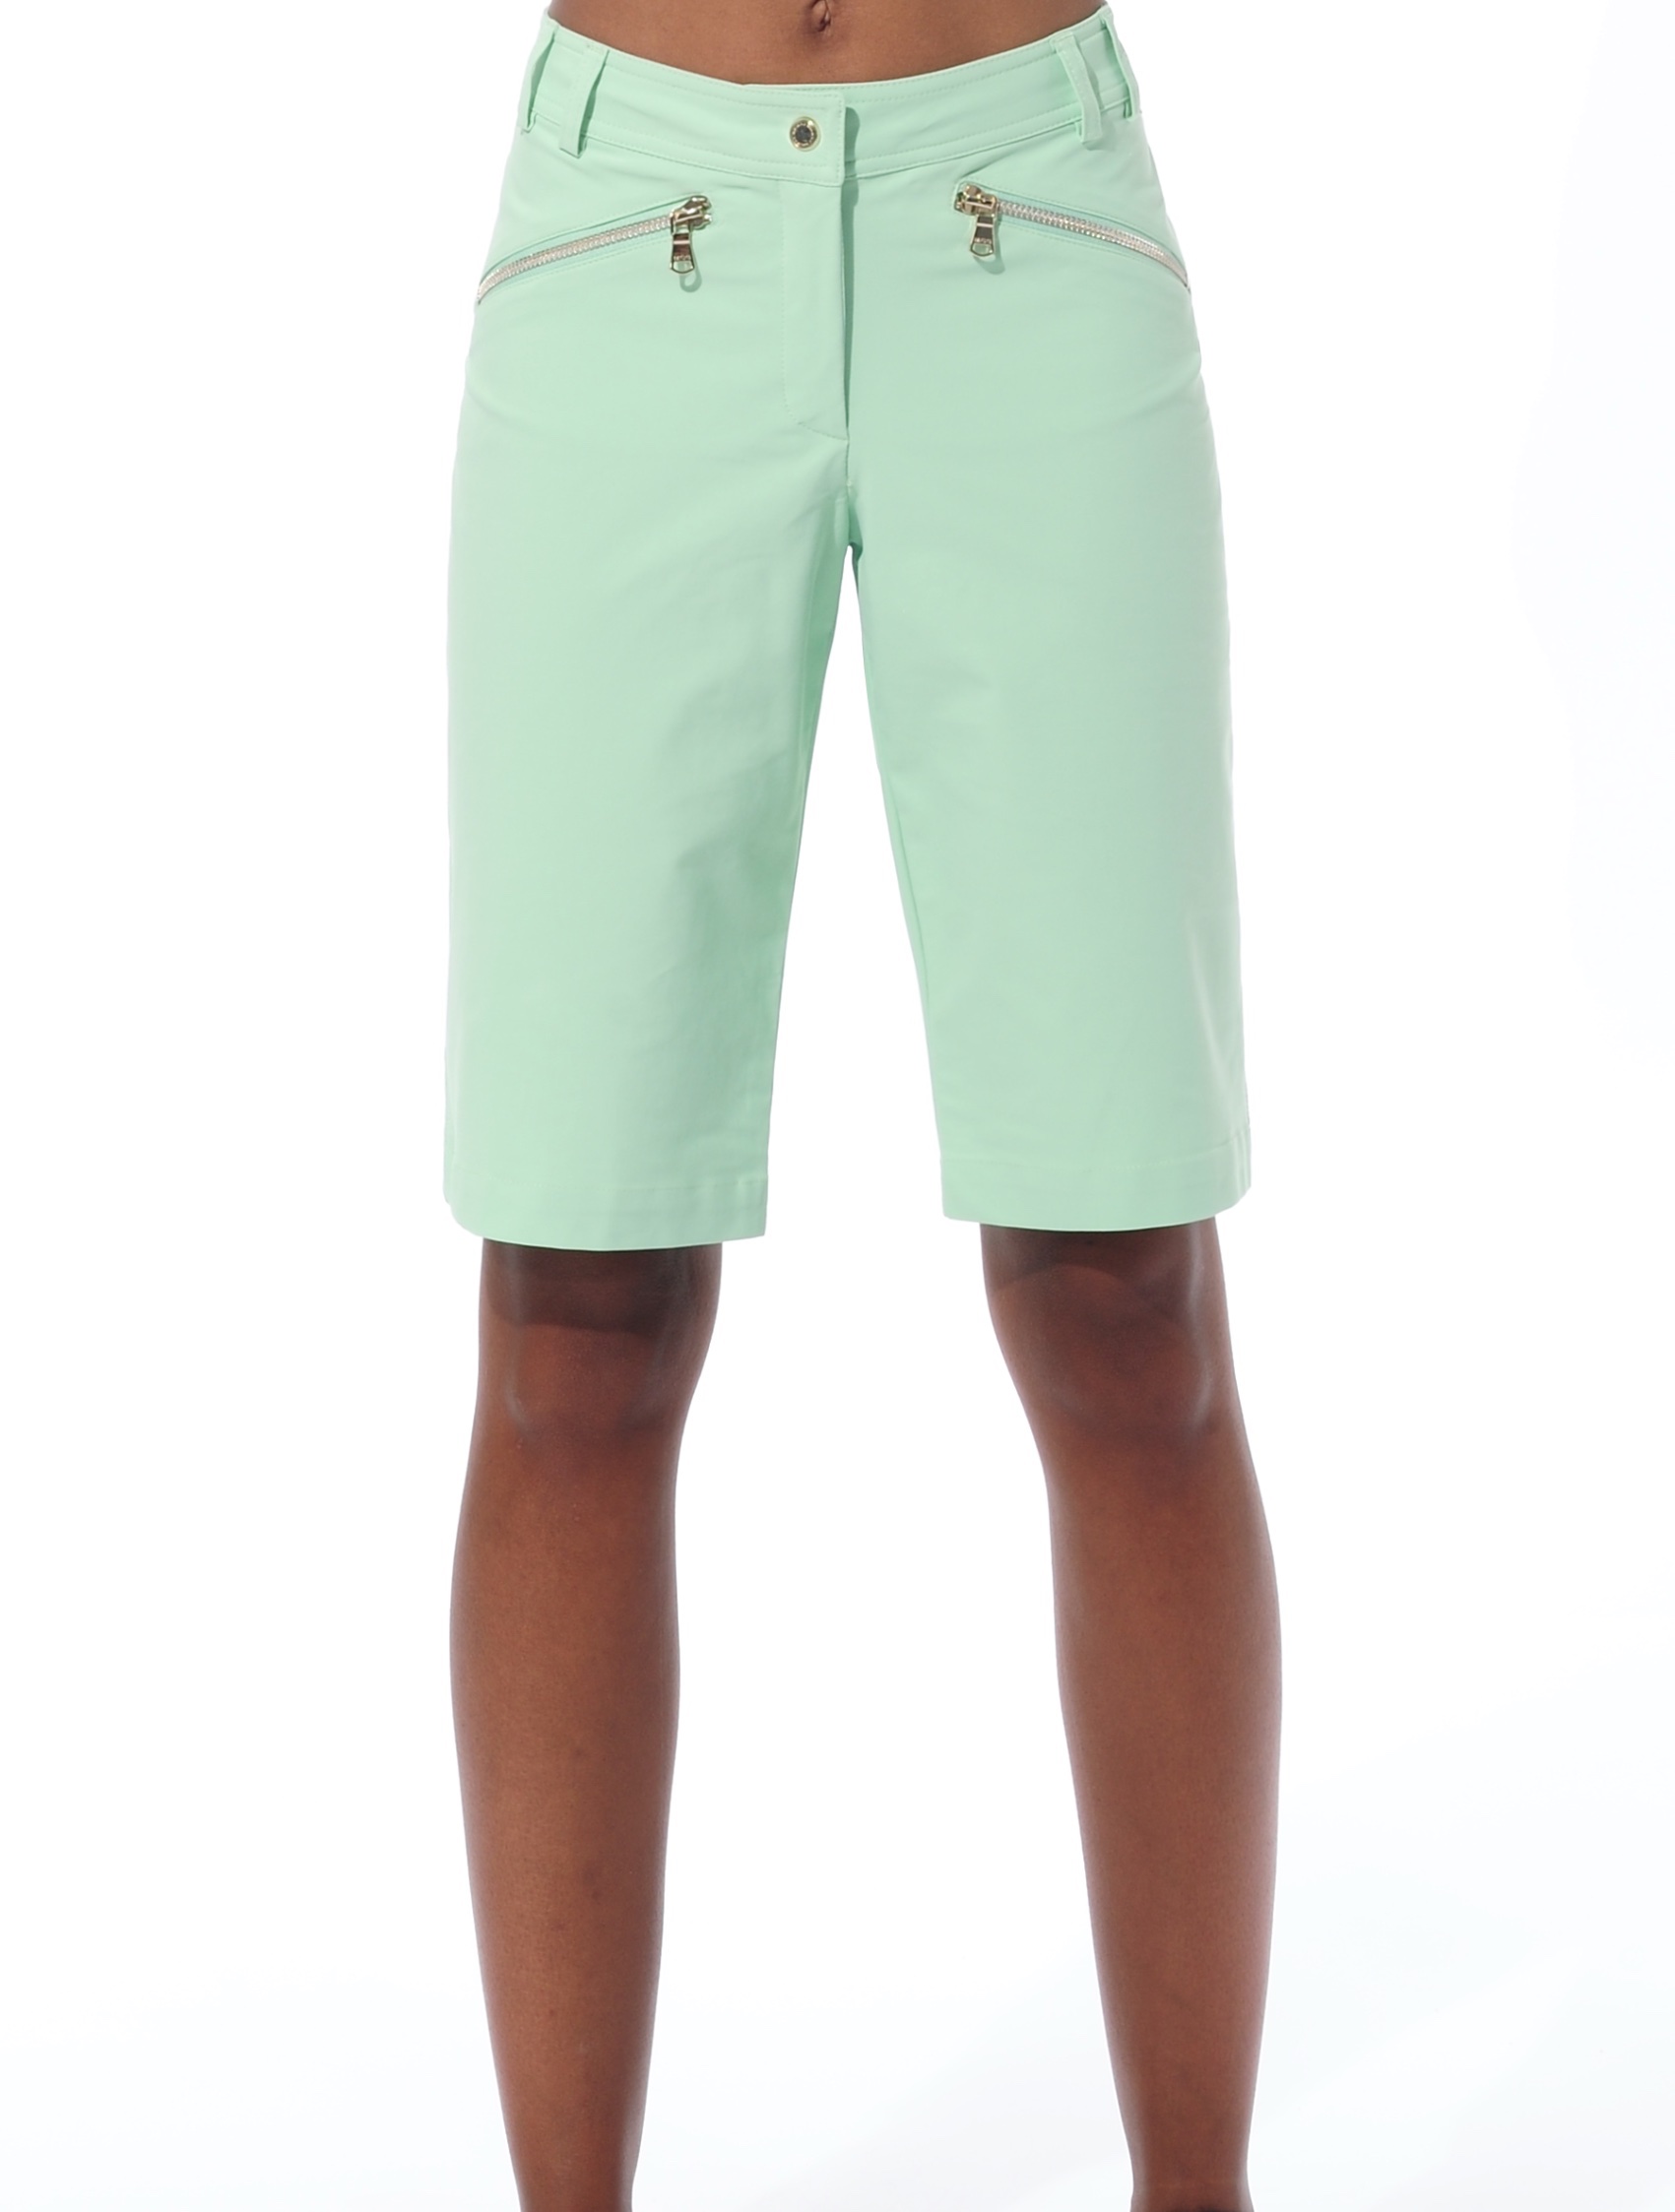 4way stretch bermuda shorts neo mint 